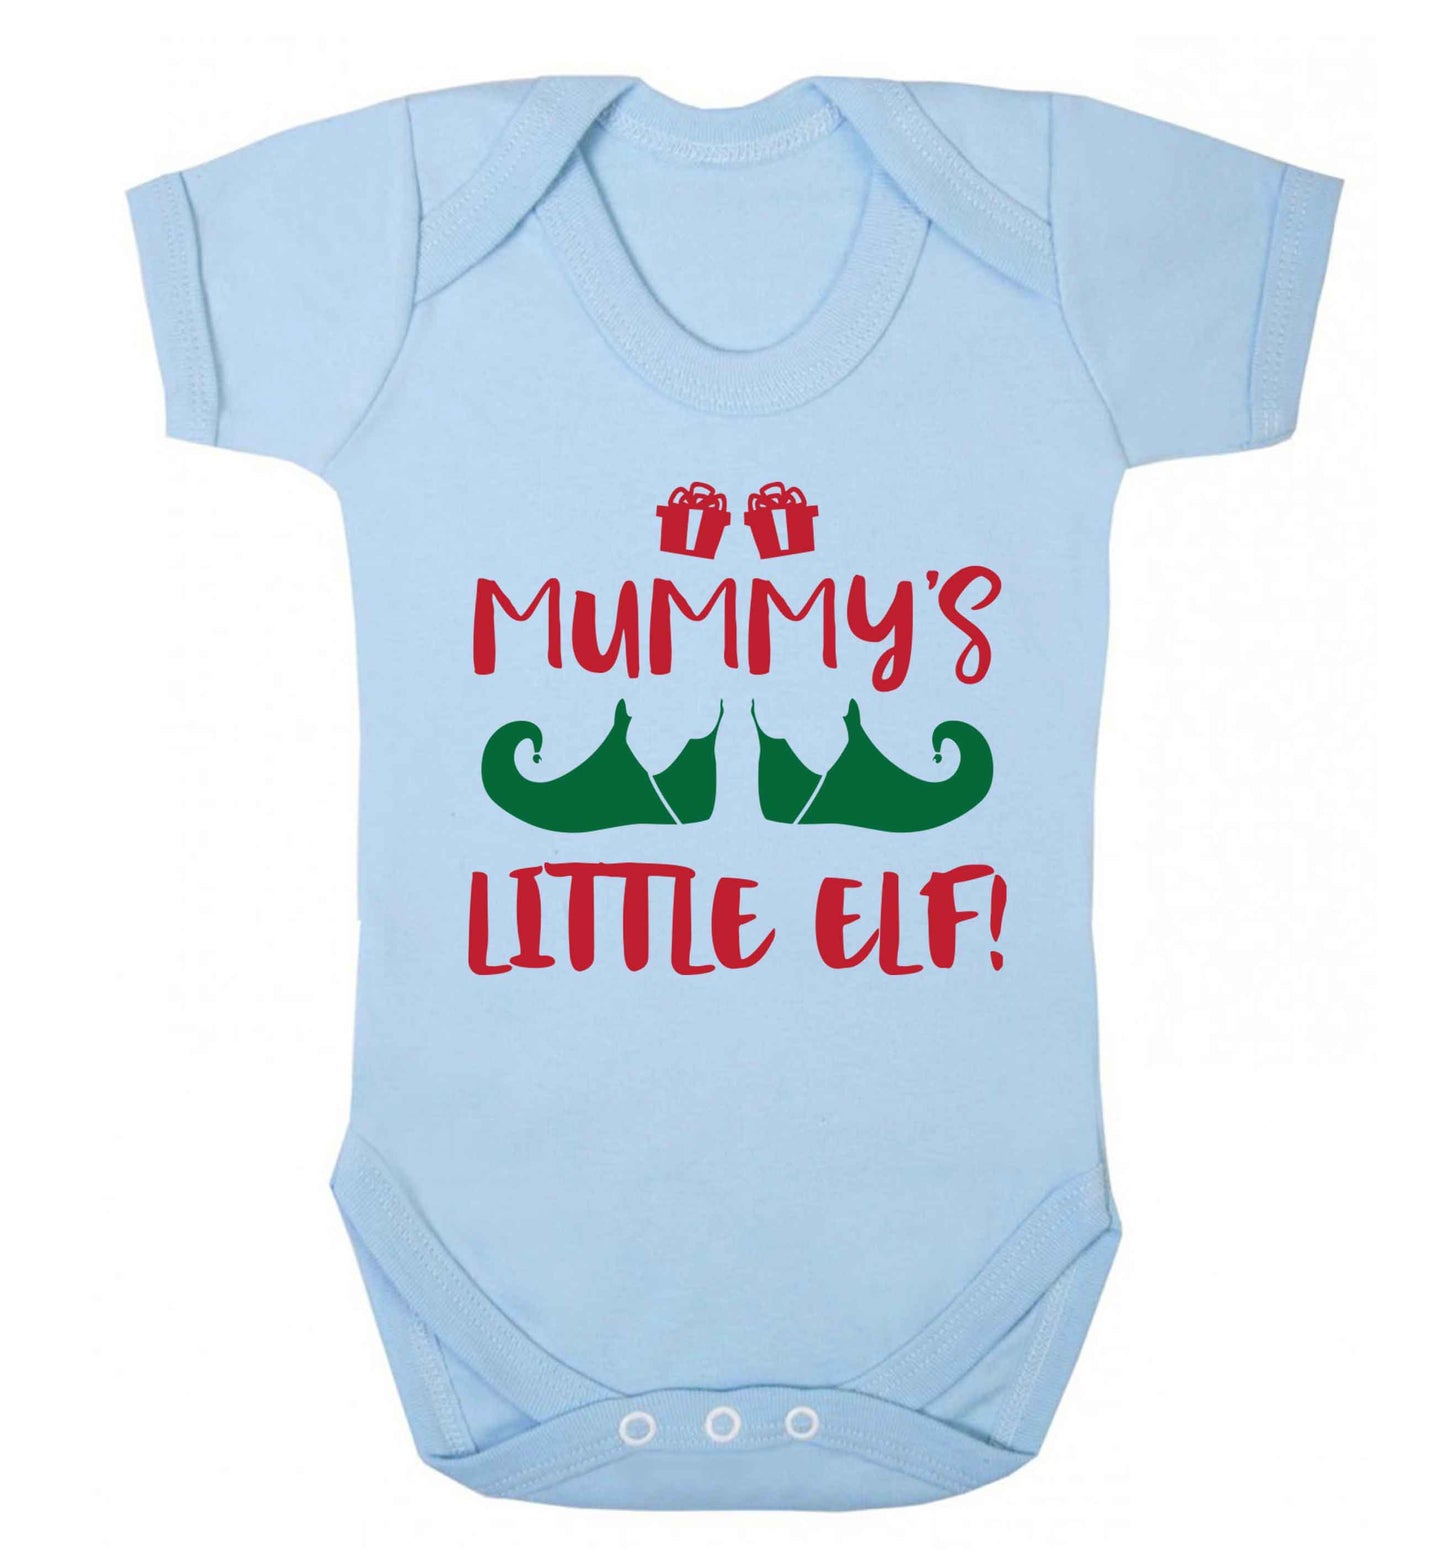 Mummy's little elf Baby Vest pale blue 18-24 months